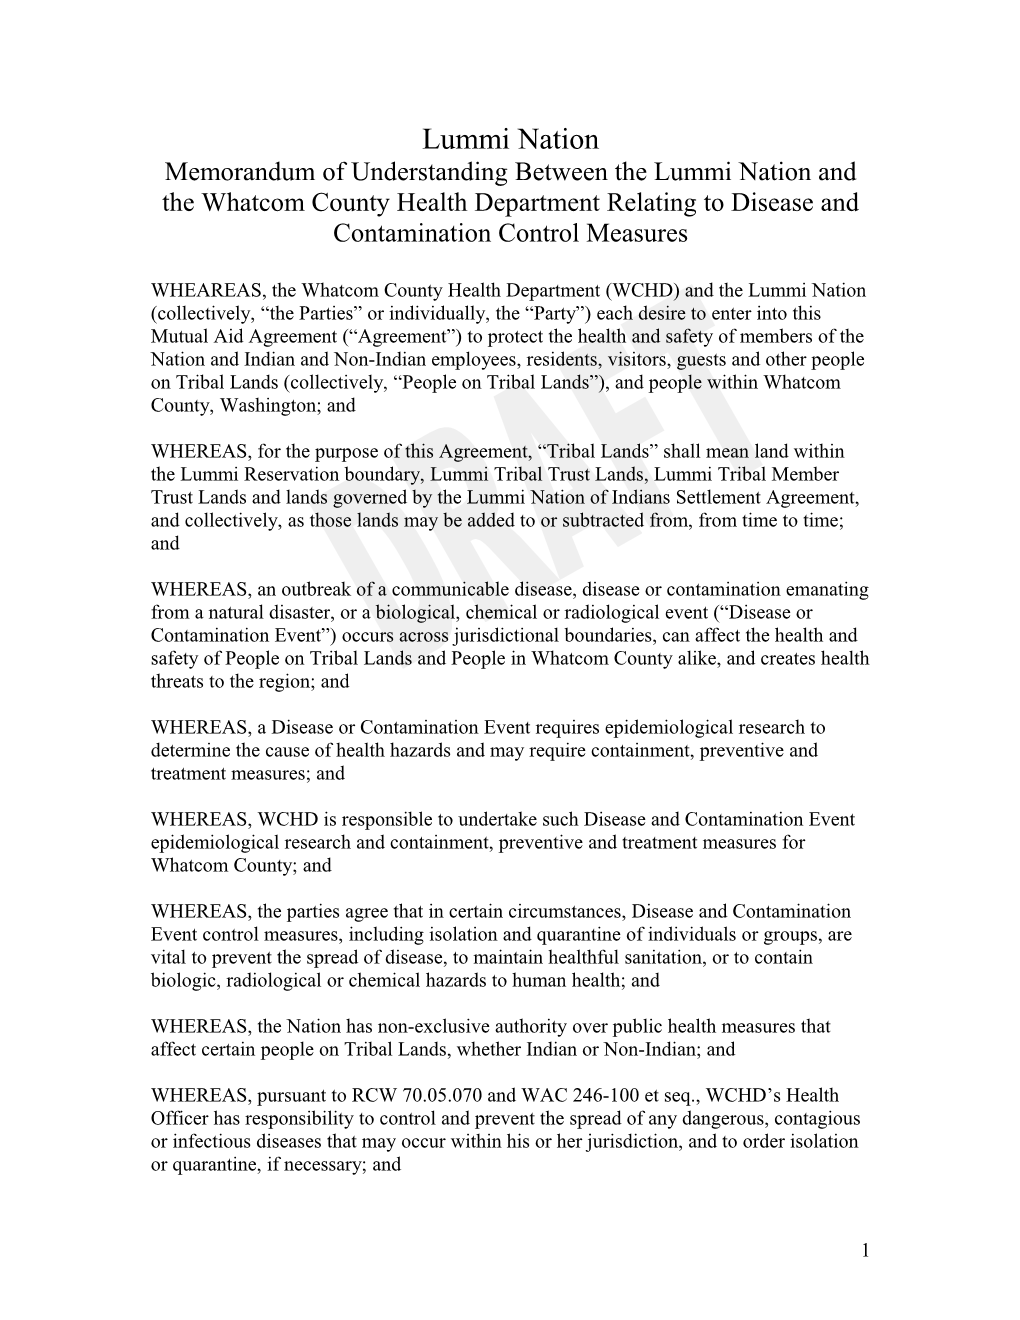 Memorandum of Understanding Between the Lummi Nation and the Whatcom County Health Department